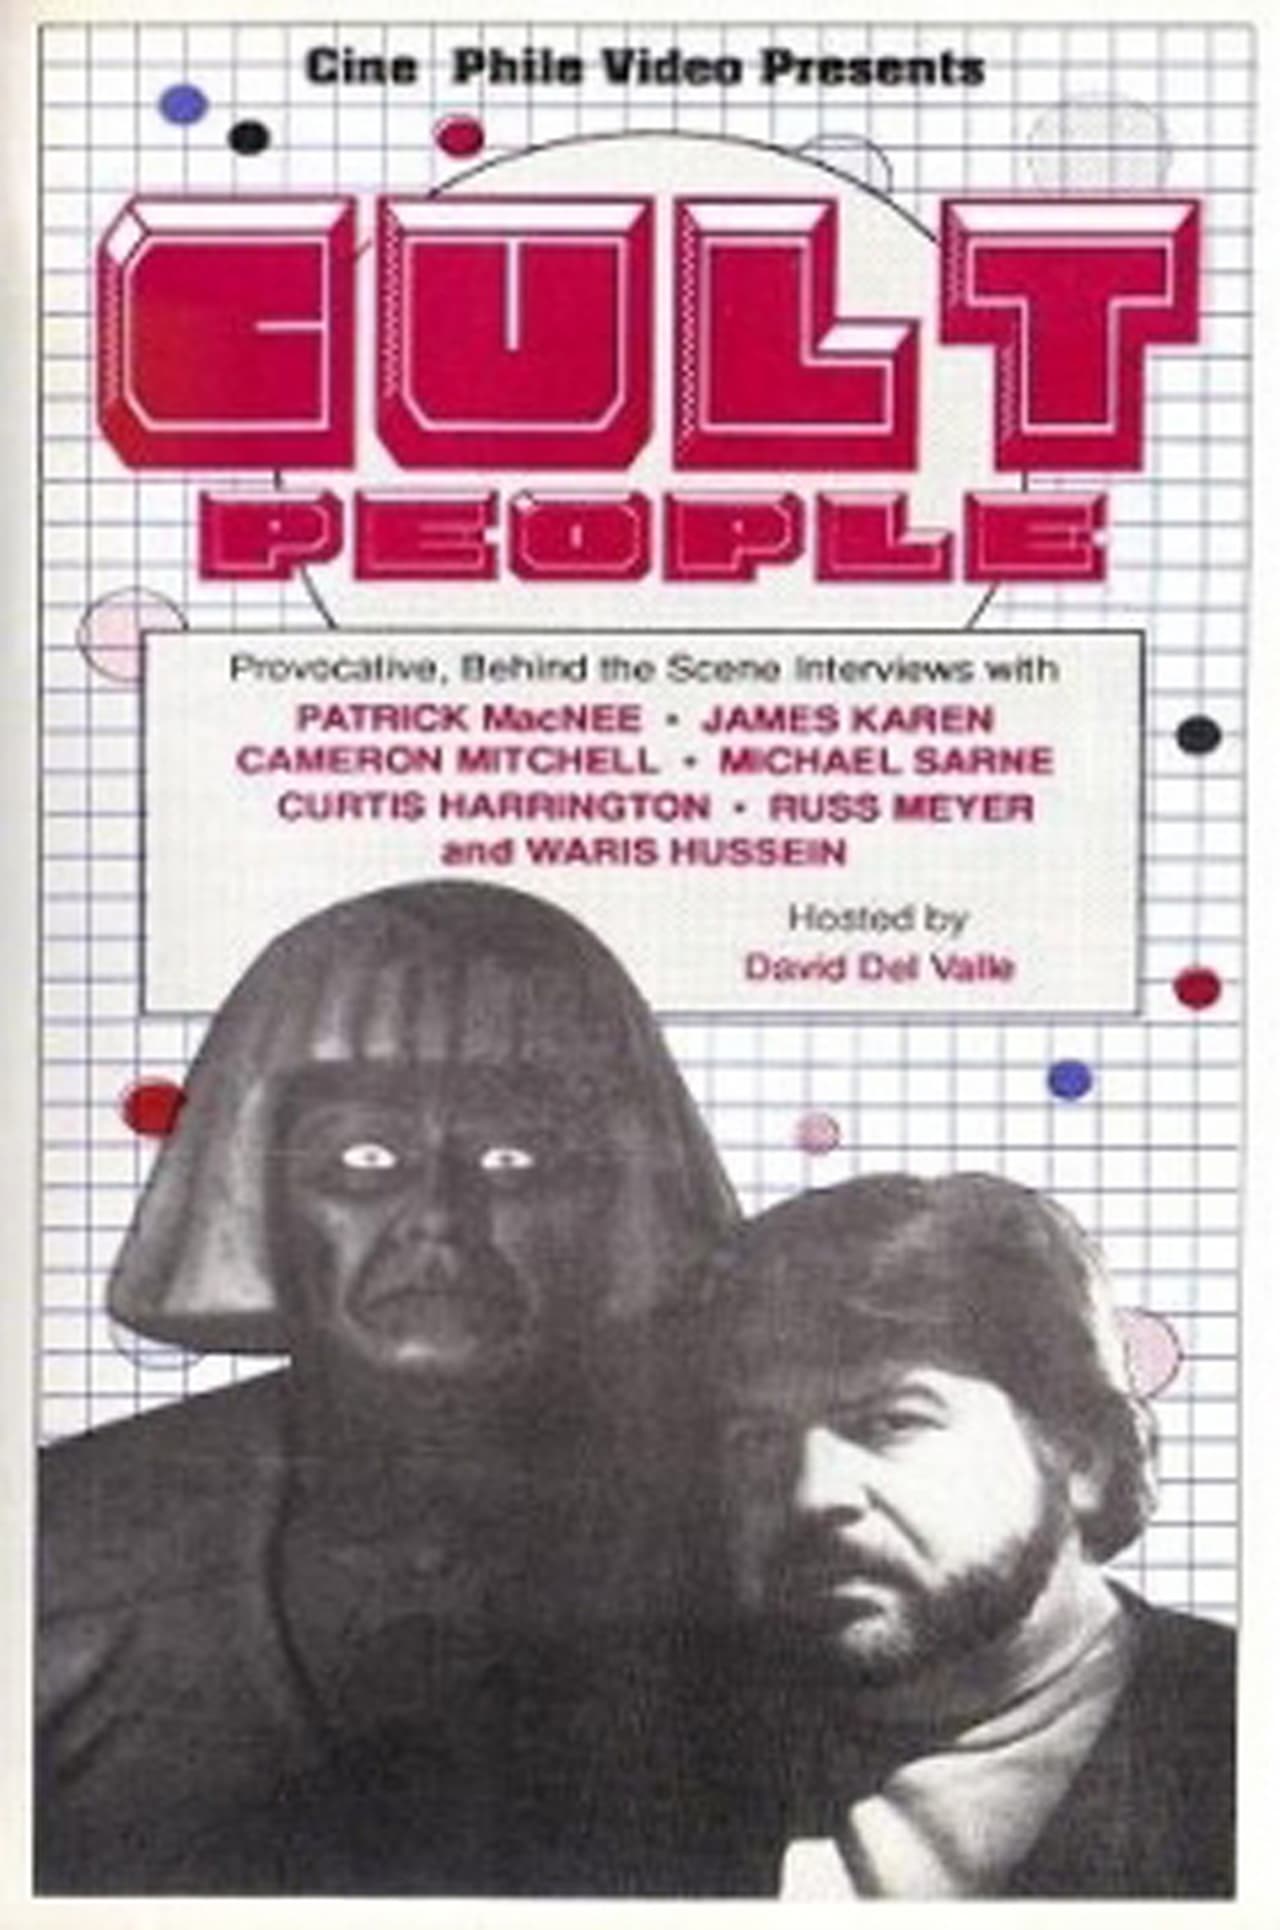 Cult People (1989) Screenshot 1 